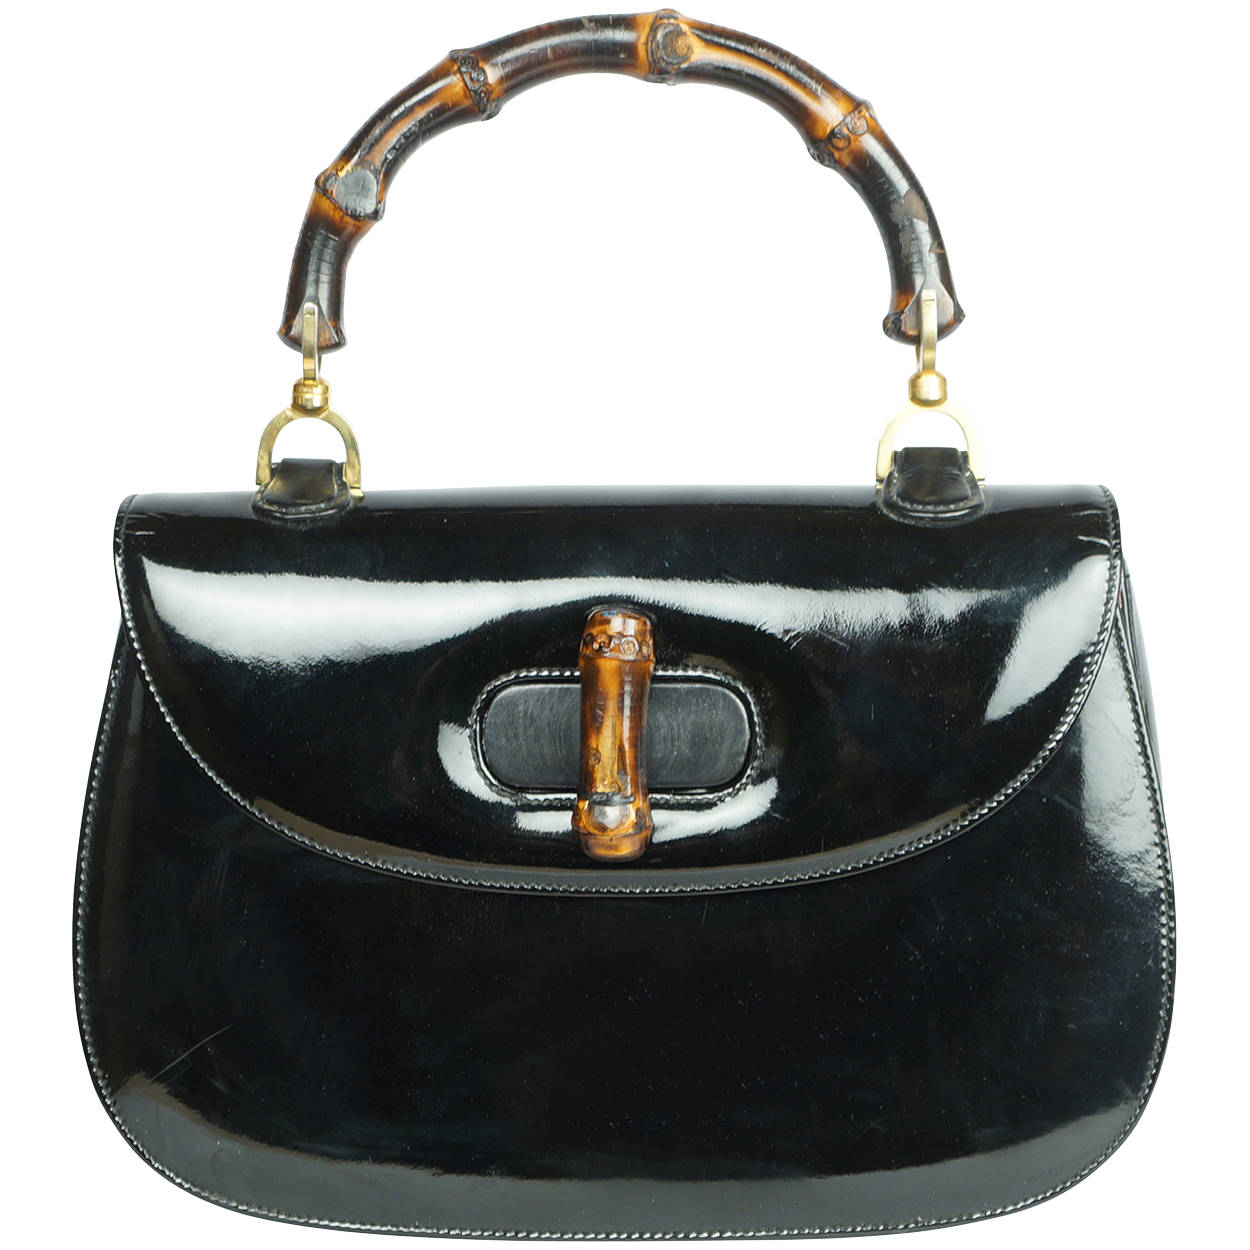 Gucci Cane Handle Handbag